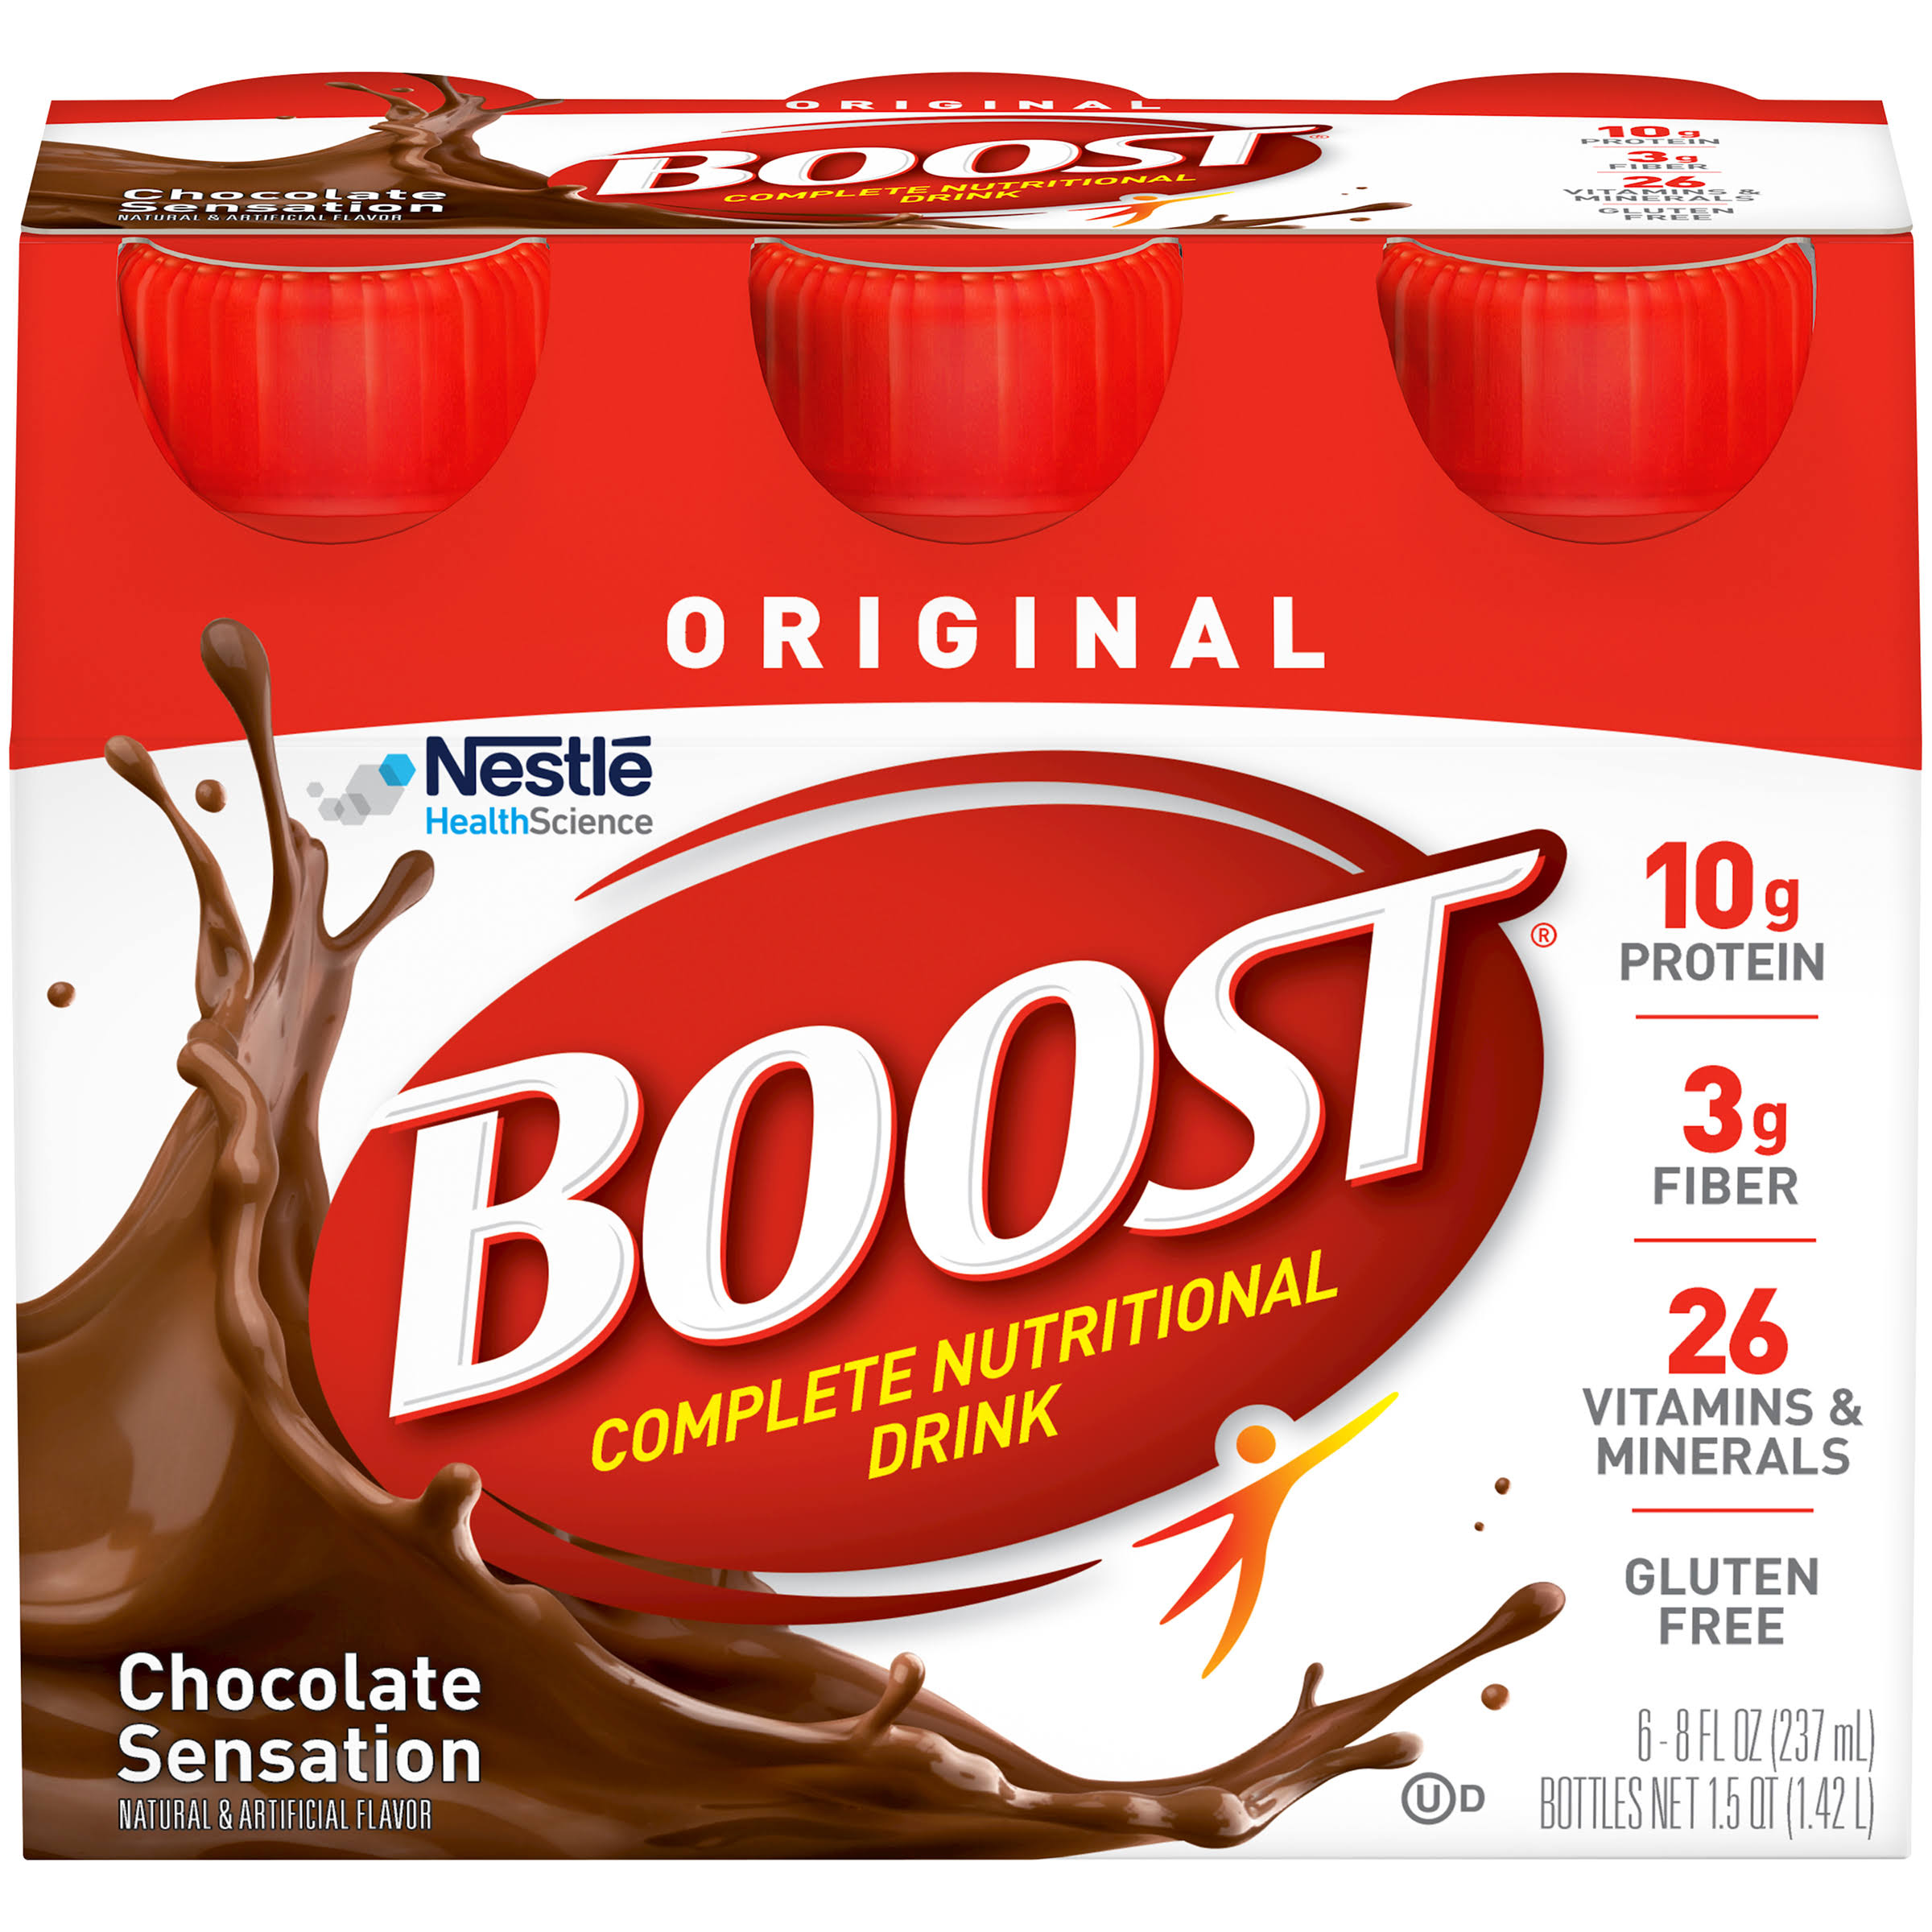 Nestle Boost Original Complete Nuritional Drink - Chocolate Sensation, 6 Bottles, 1.42l